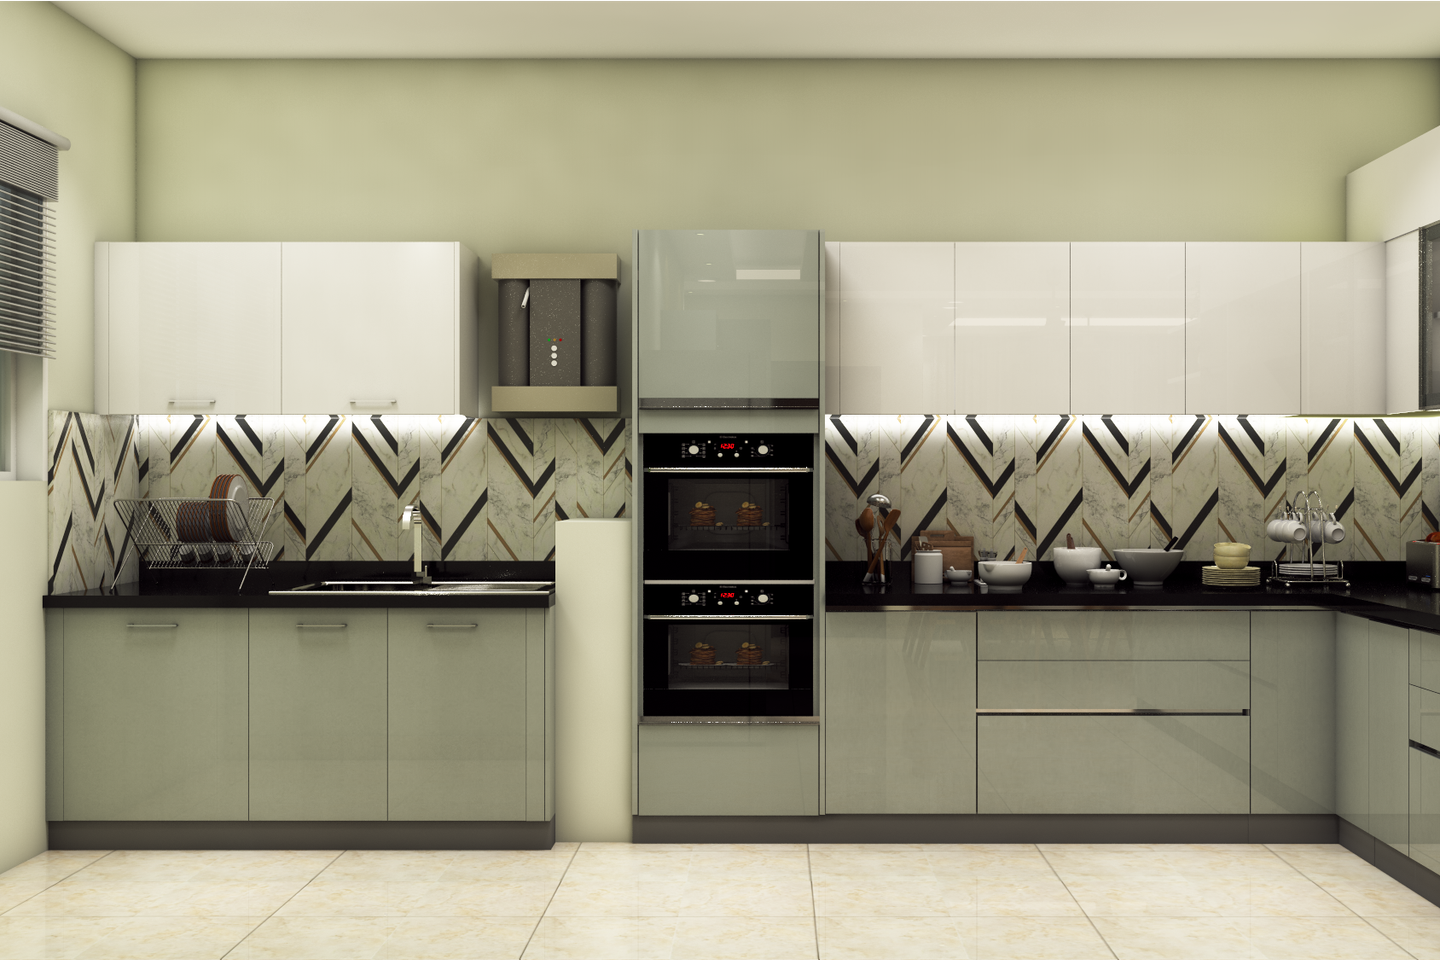 Spacious Modular Kitchen Design For Rental Homes - Livspace